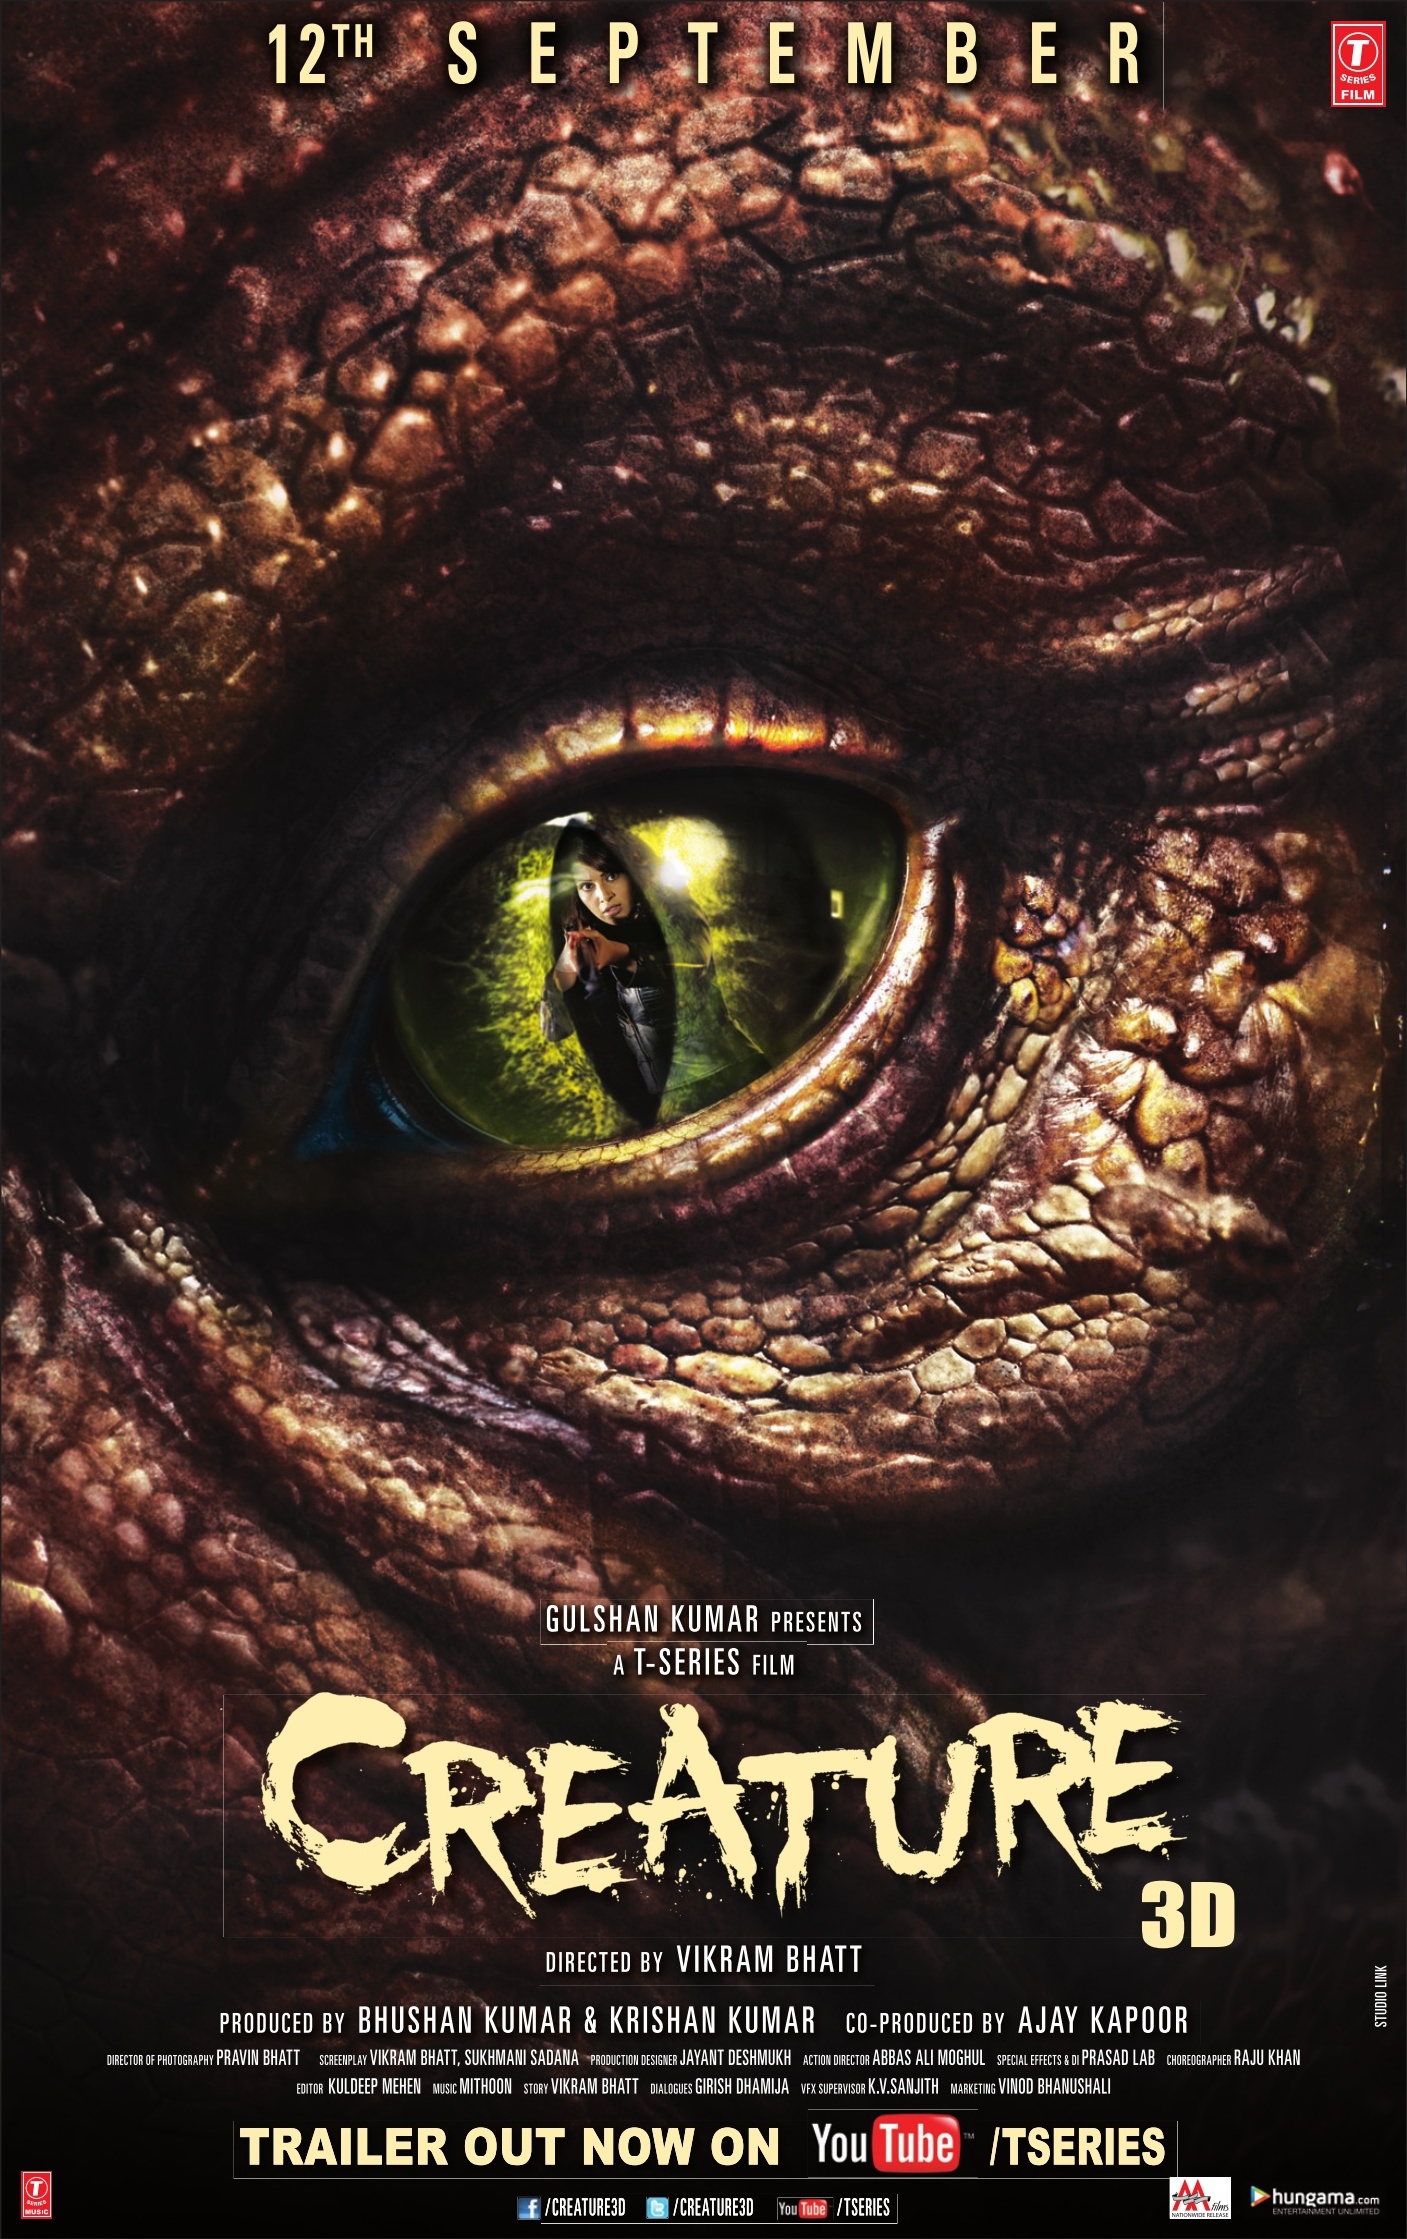 Watch Online Creature 3D 2014 Full Hindi Stream Movie ...